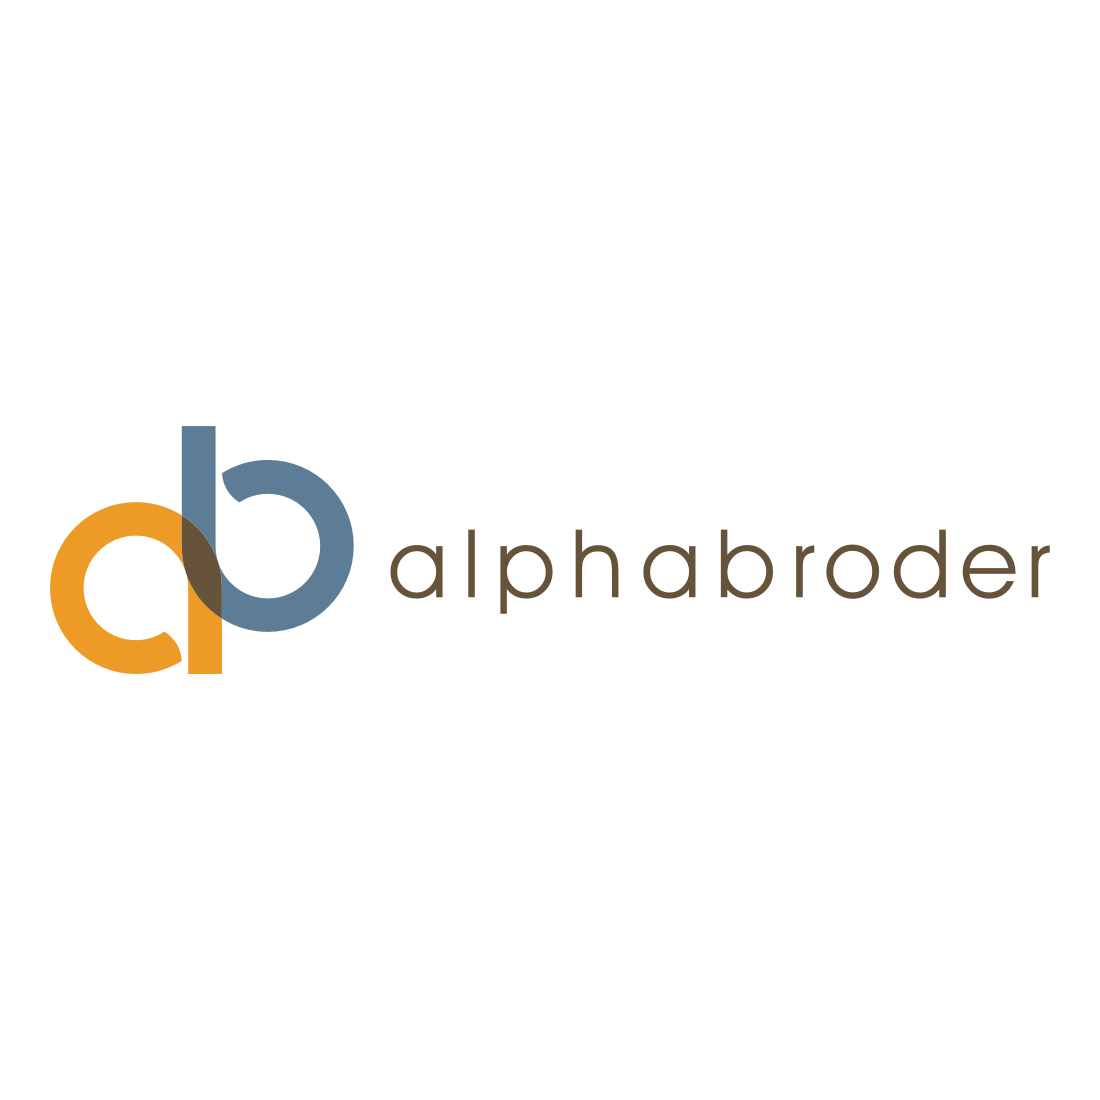 Alphabroder Product Catalog